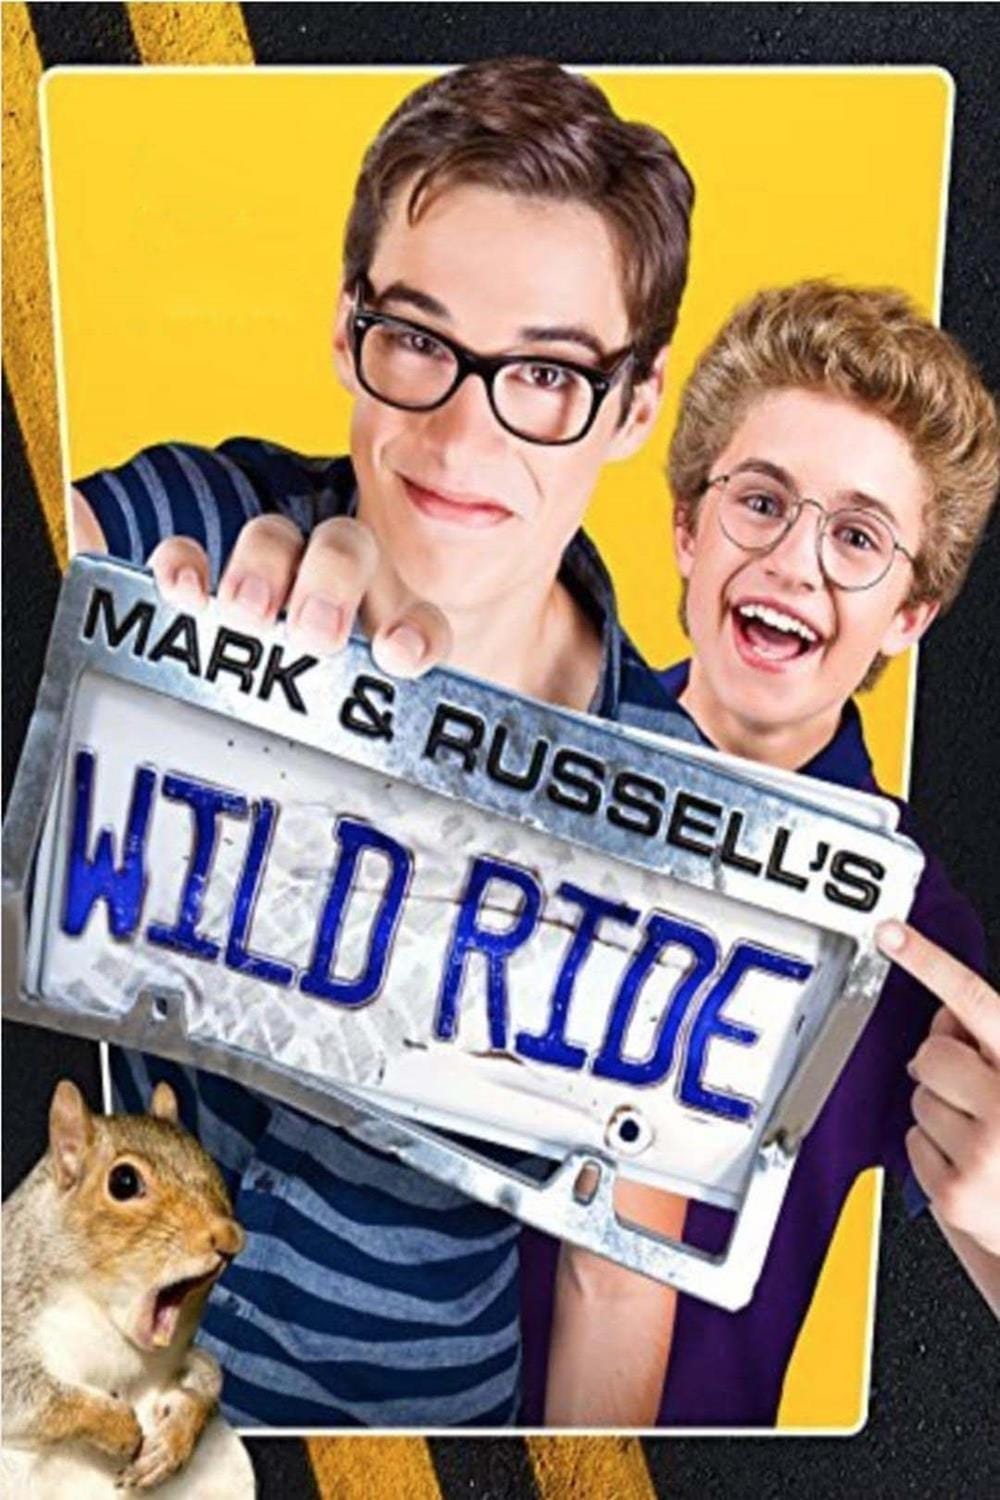 Mark & Russells Wild Ride